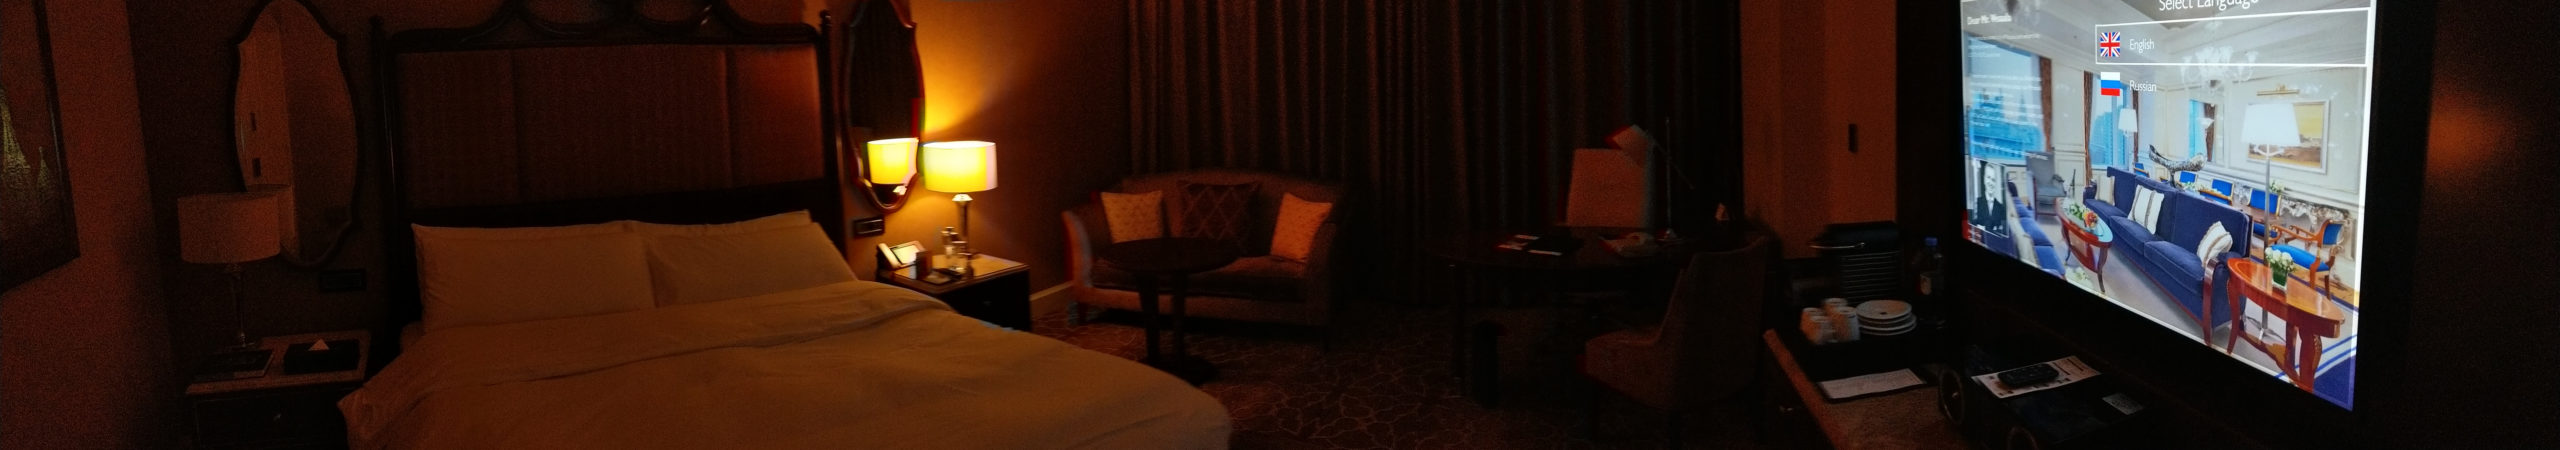 5-Star Hotel Room